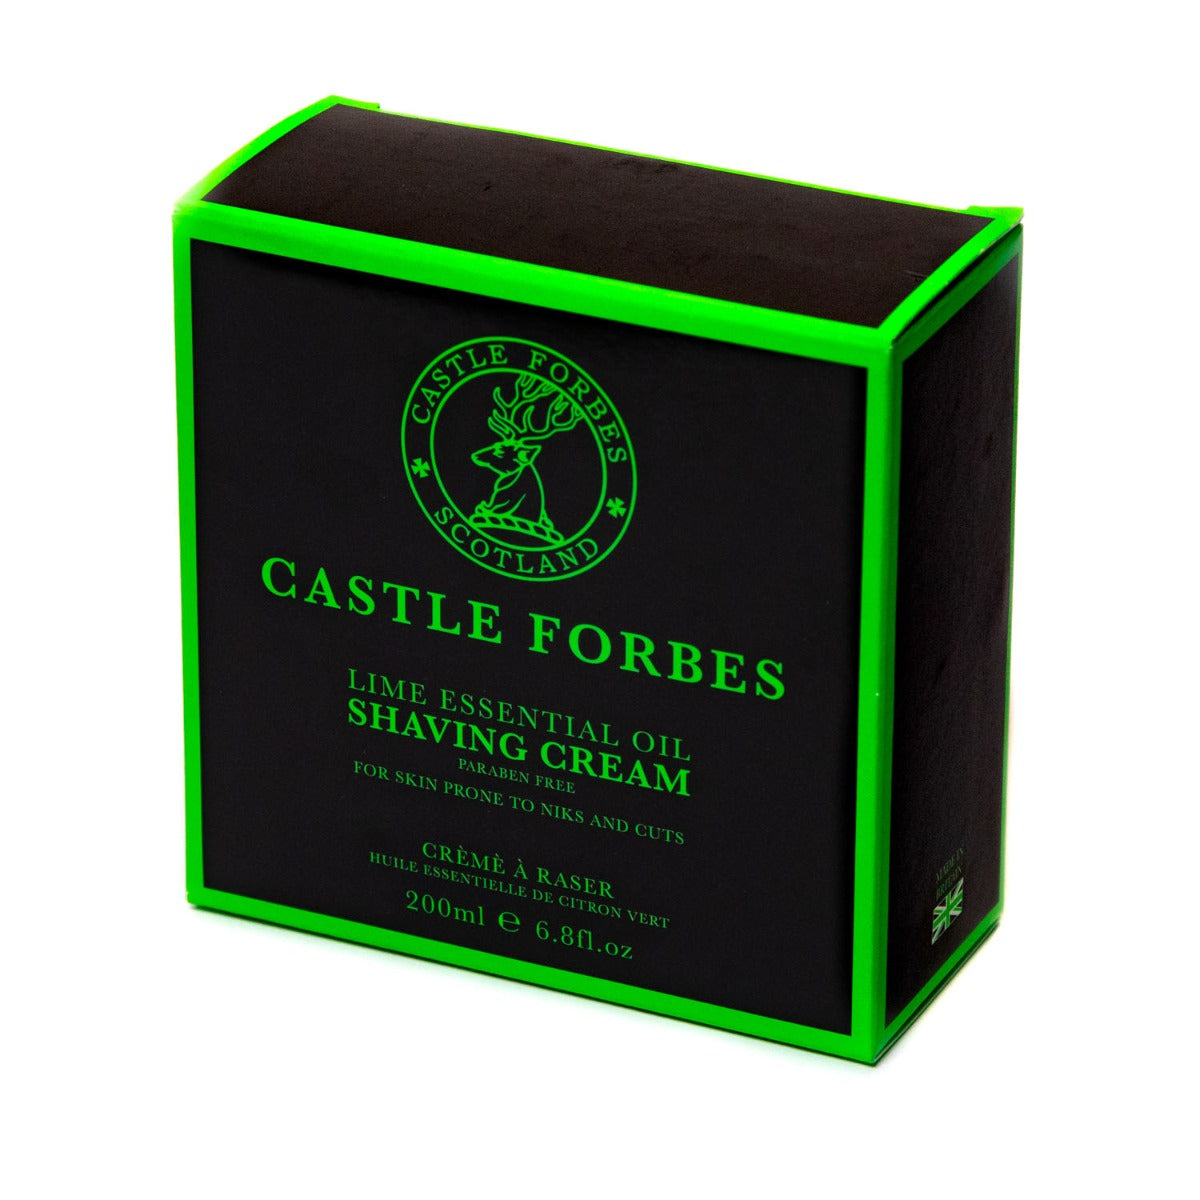 Castle Forbes Lime Essential Oil Shaving Cream.